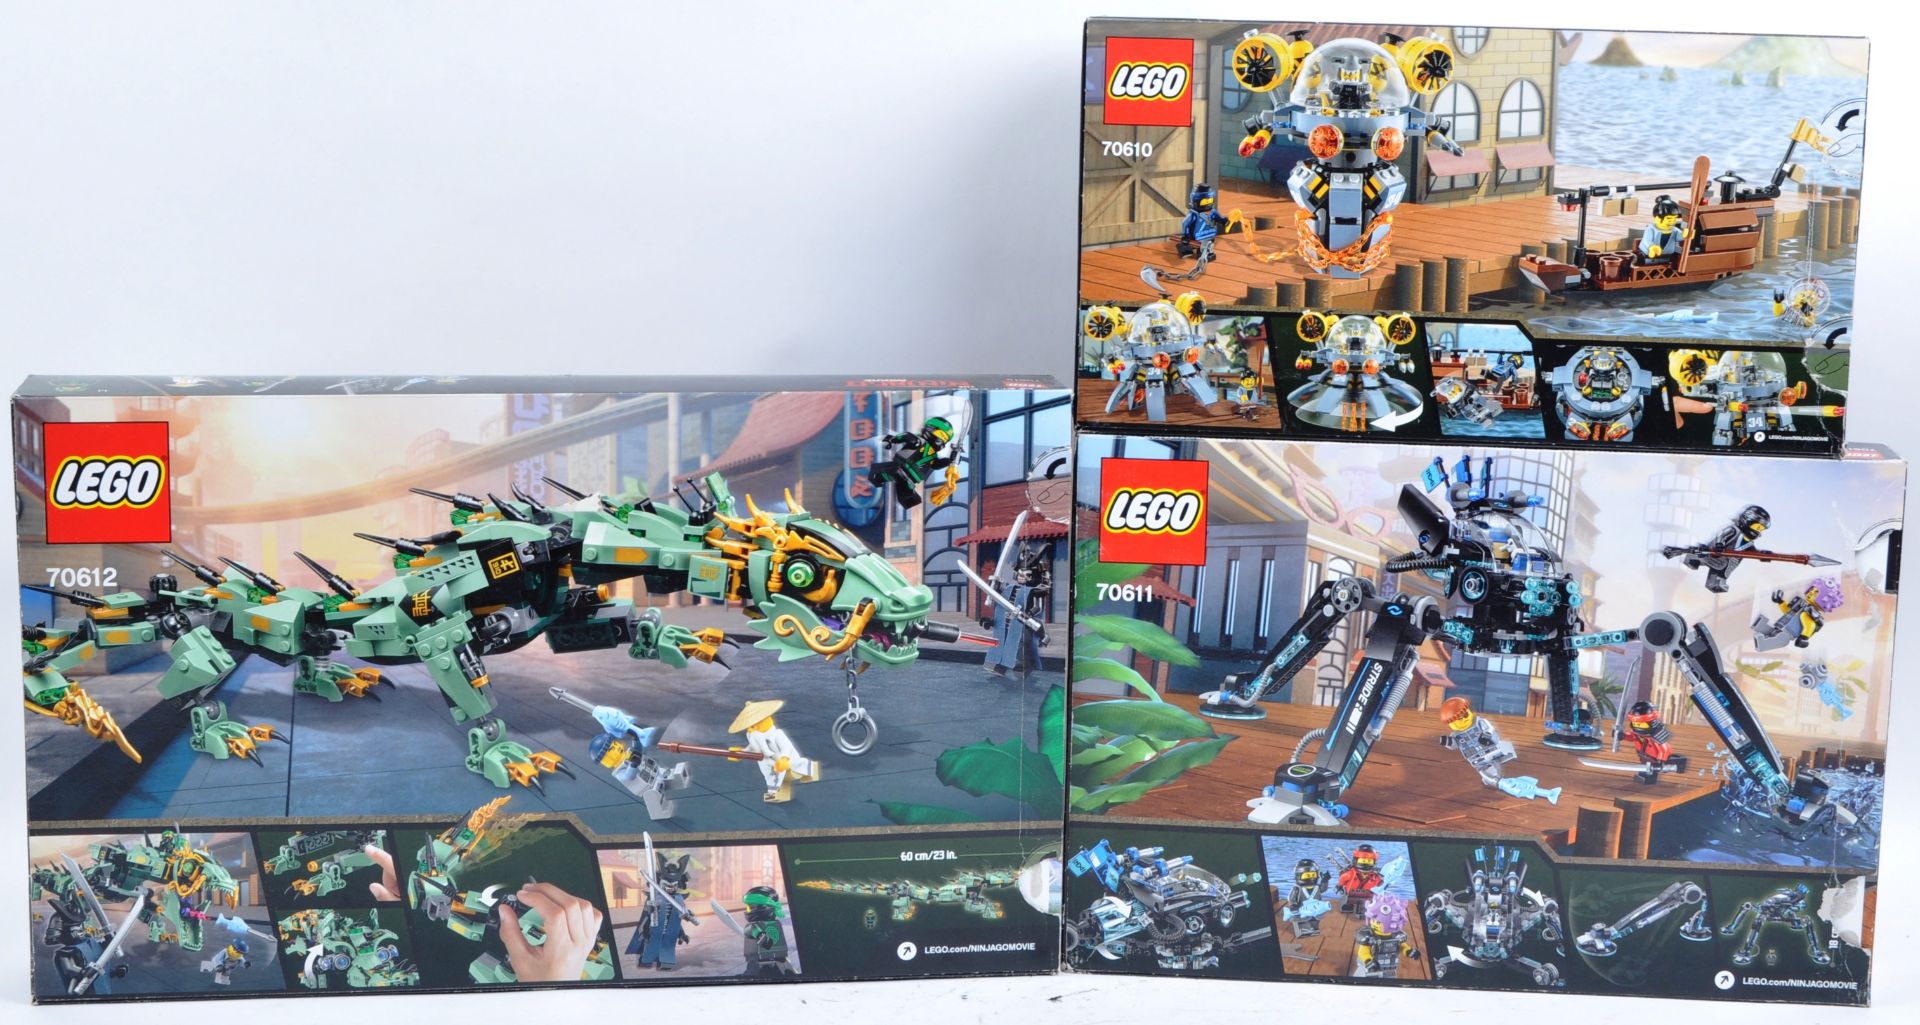 LEGO SETS - NINJAGO MOVIE - 70610 / 70611 / 70612 - Image 4 of 5